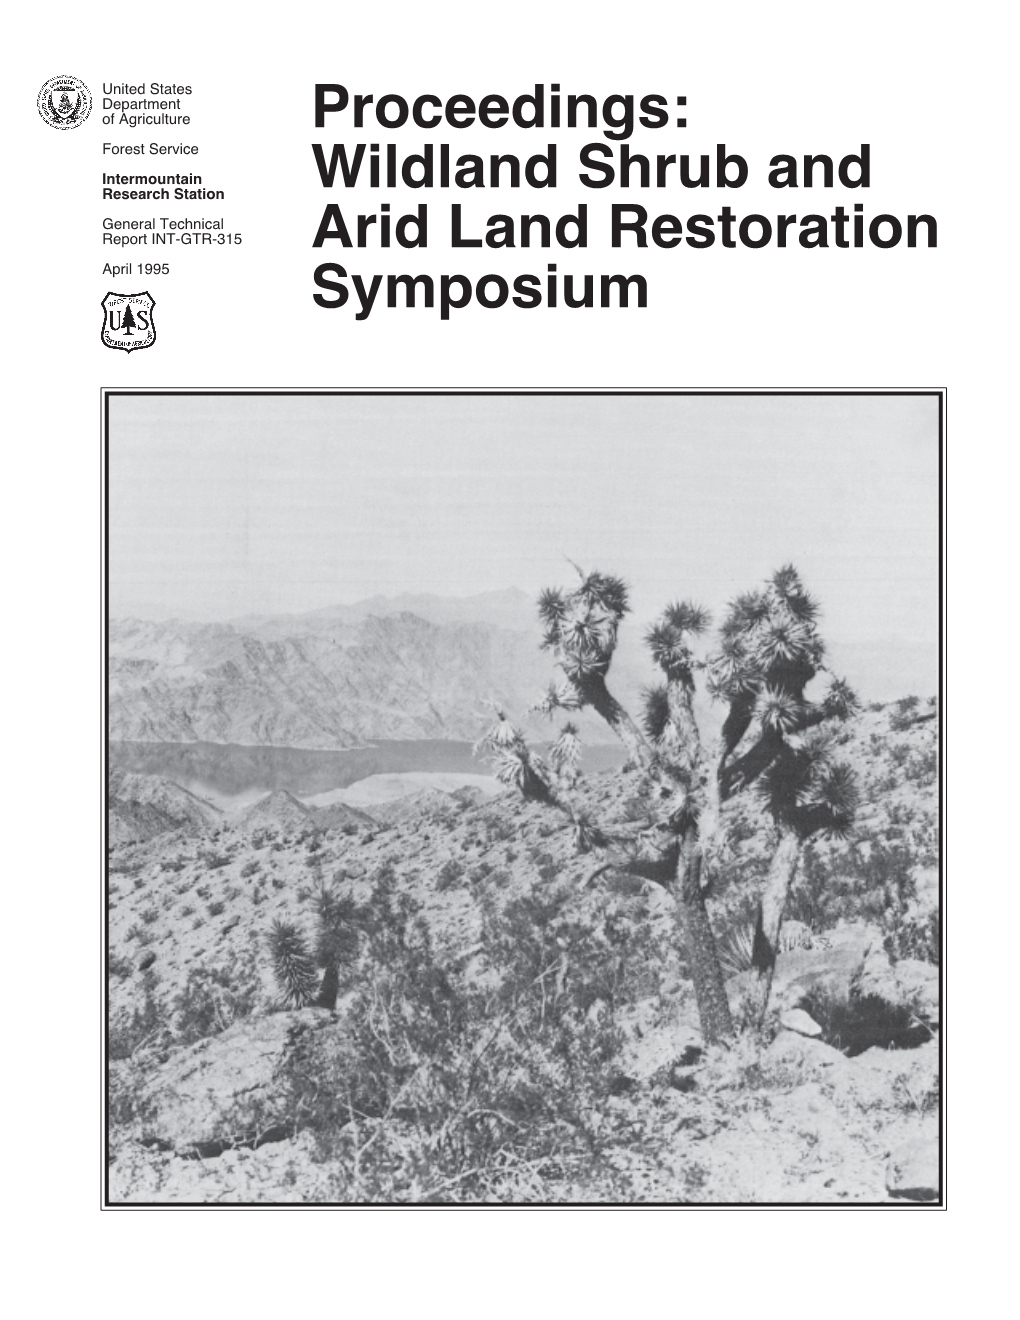 Wildland Shrub and Arid Land Restoration Symposium